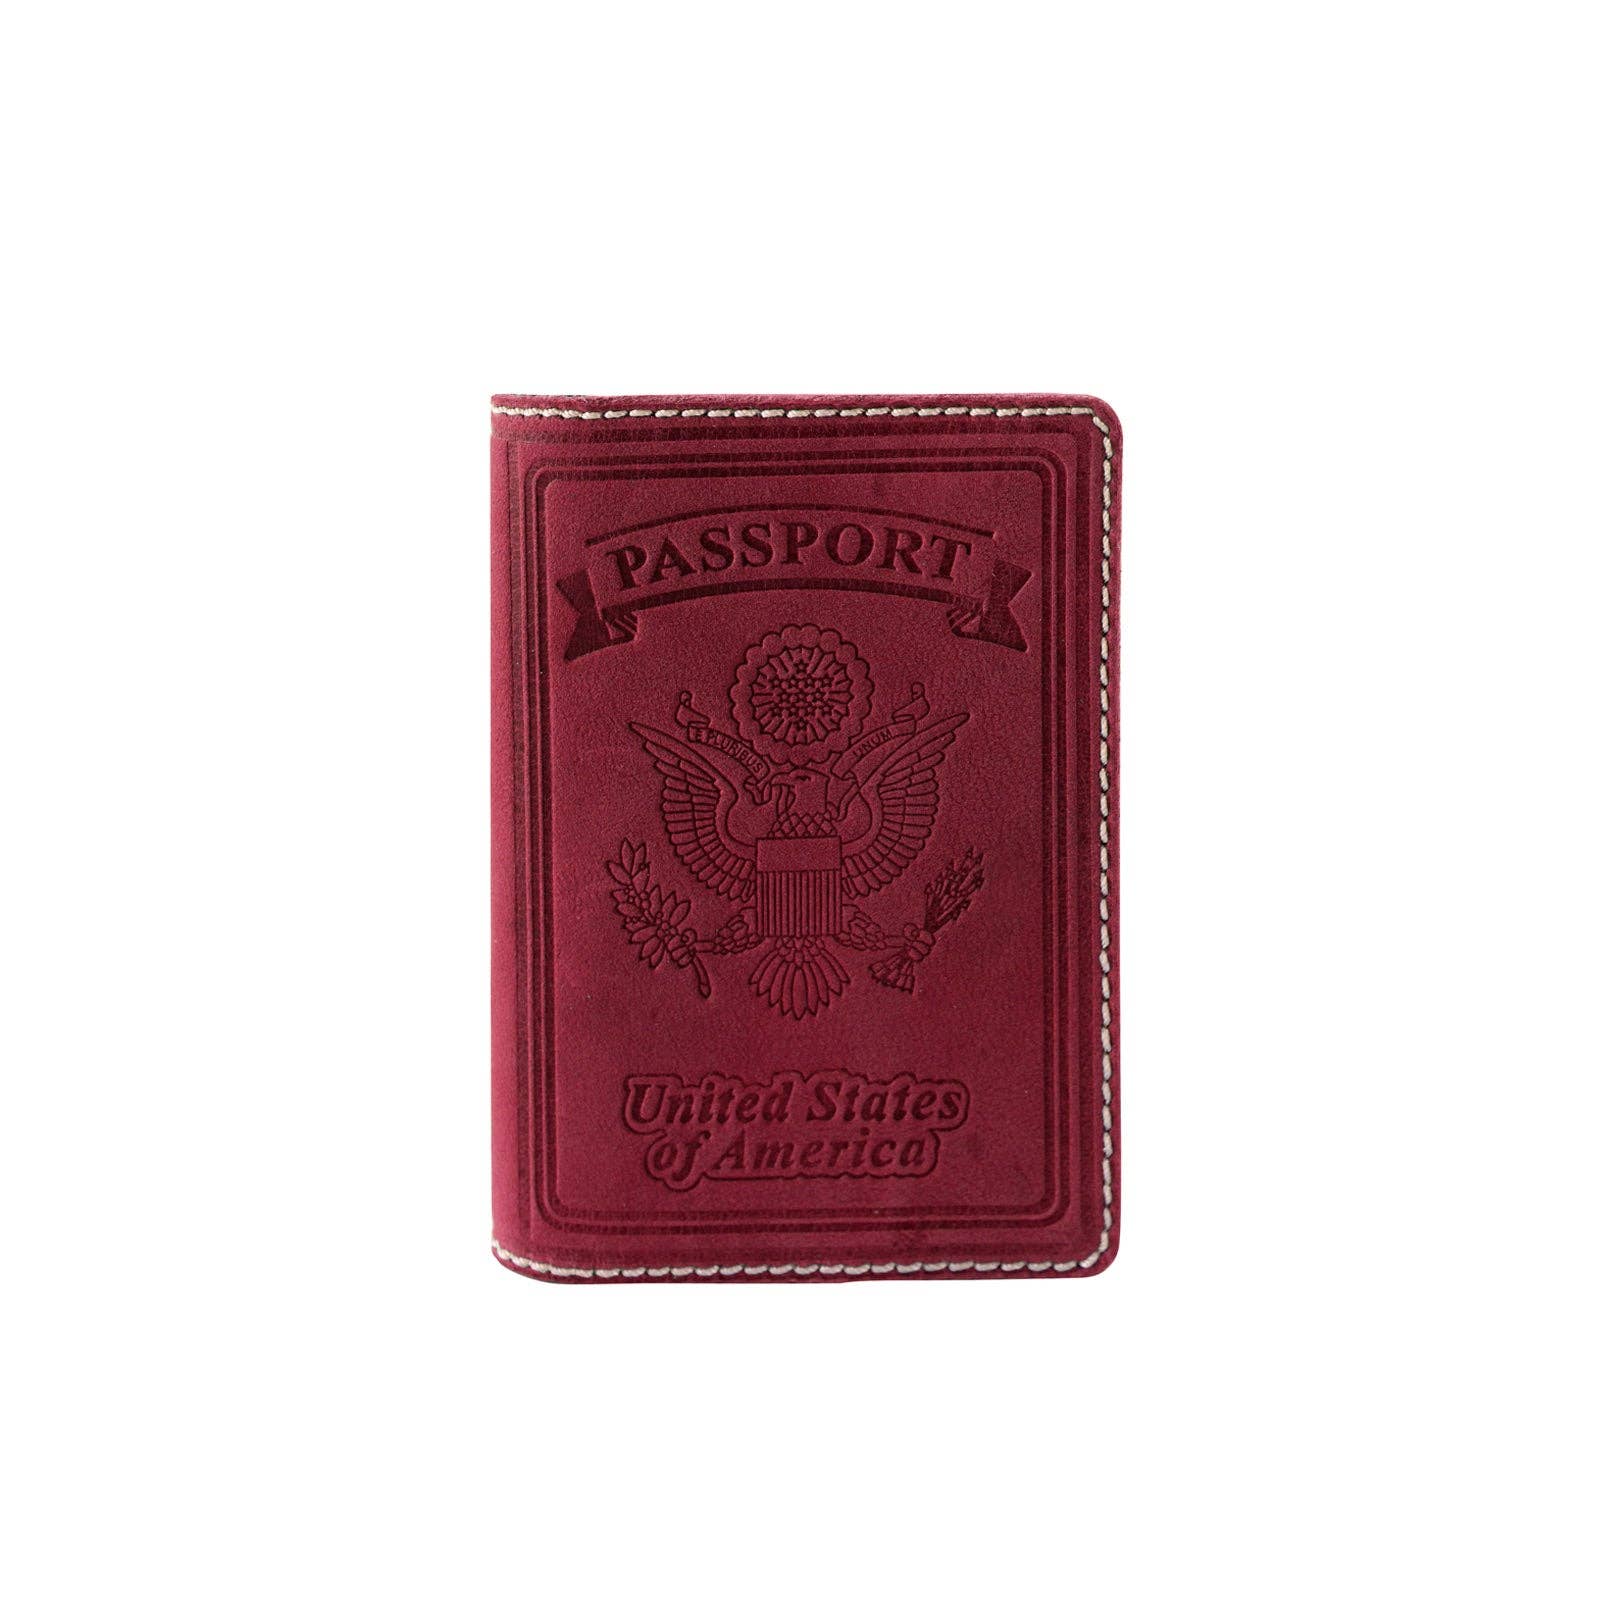 Montana West Passport Holder Cover Wallet Genuine Leather Unisex Western Passport Cover Card Case Travel Accessories Men Navy 